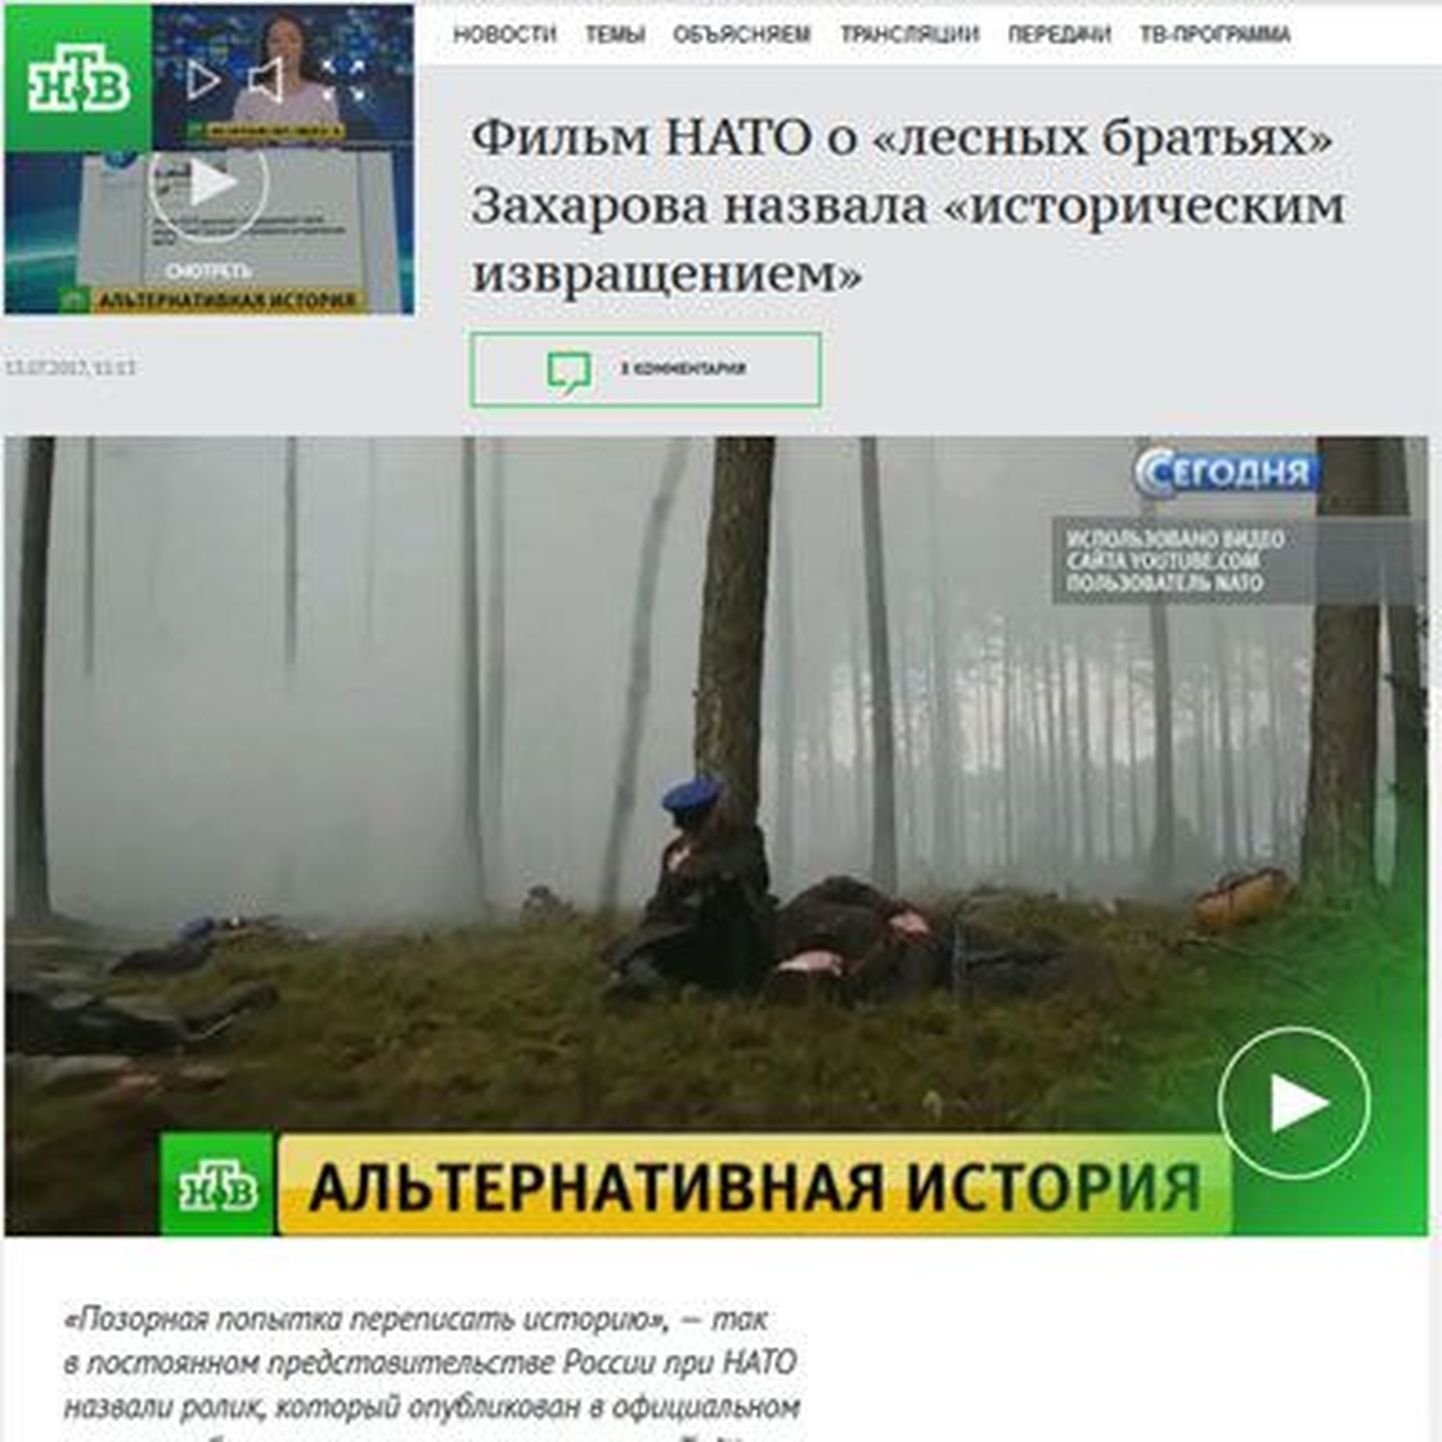 Vene telekanali NTV propagandasüžee.